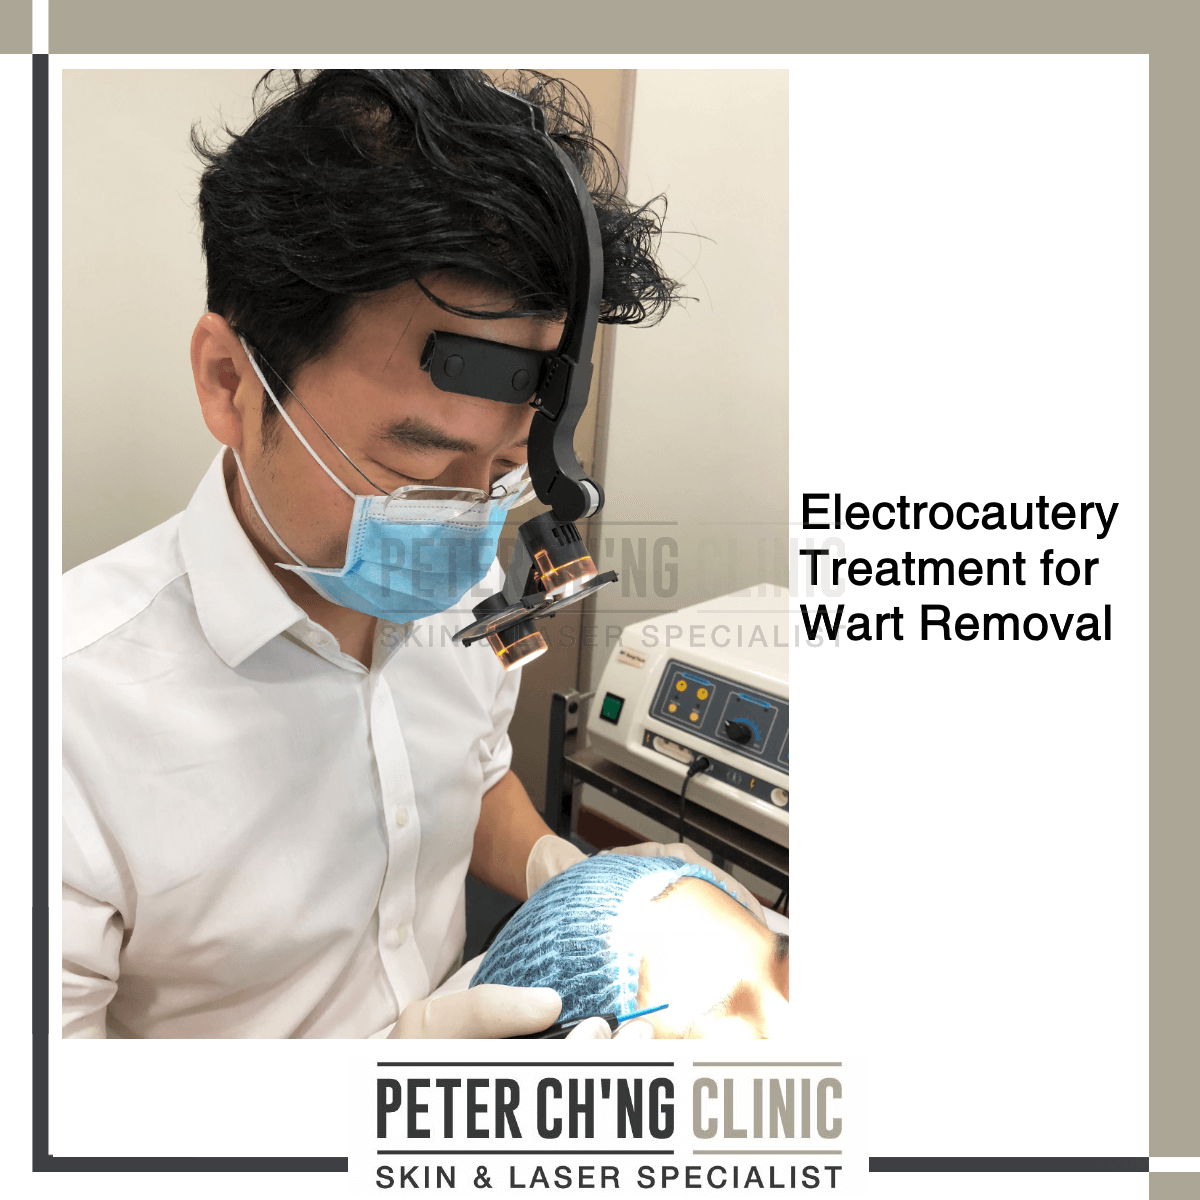 Electrocautery treatment